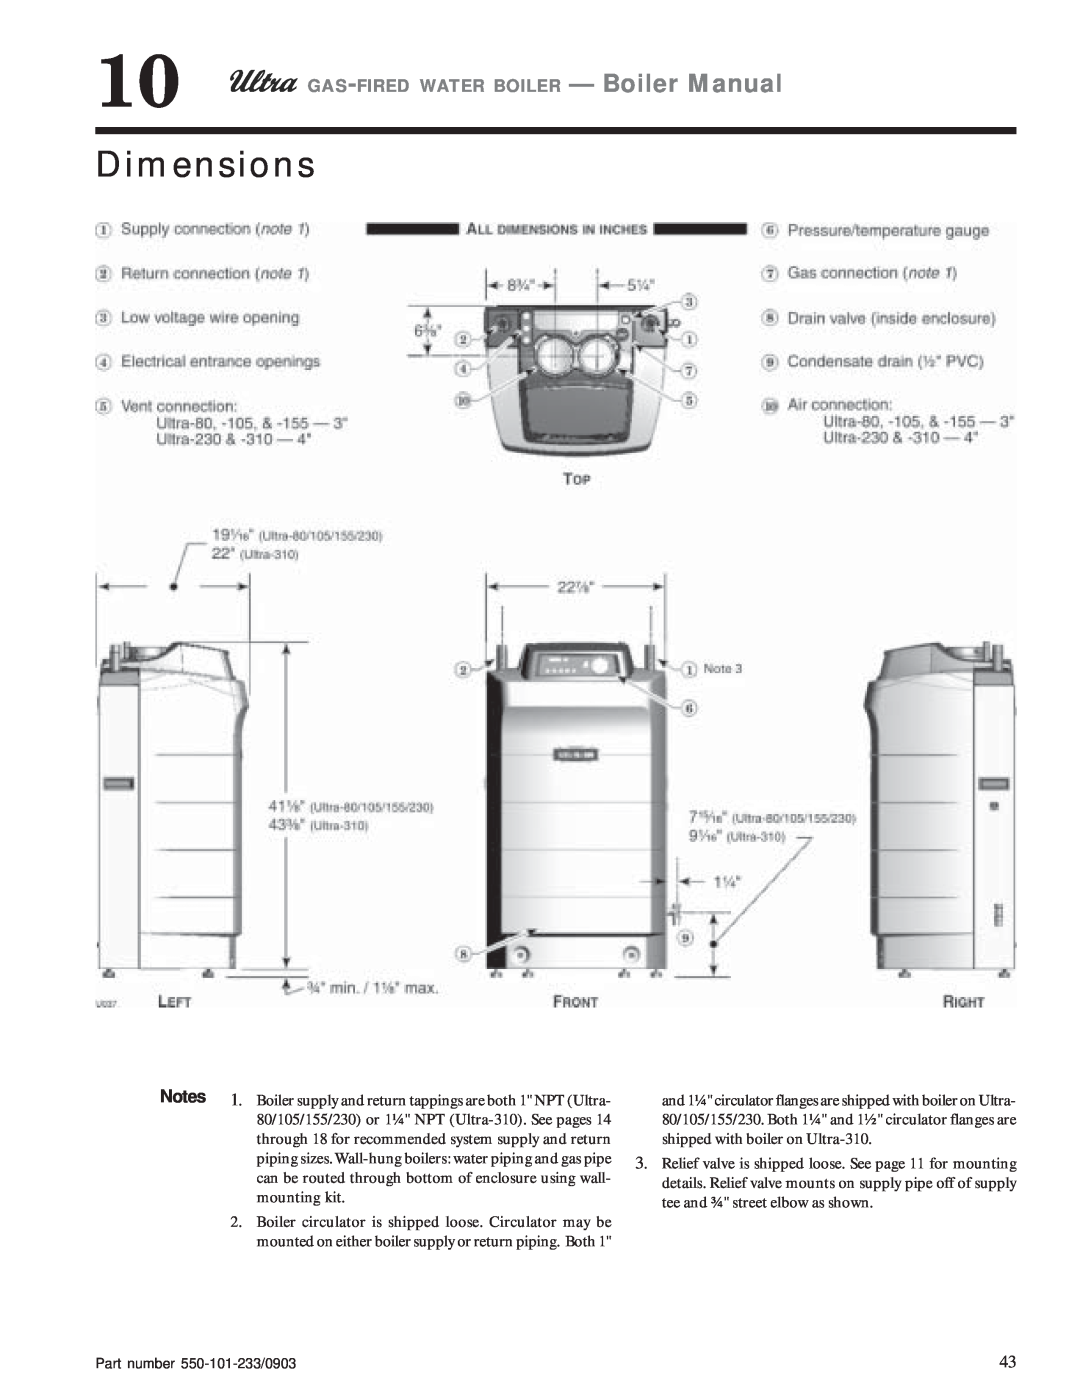 Weil-McLain 105, 80, 230, 310, 155 manual Dimensions, GAS-FIRED WATER BOILER - Boiler Manual 